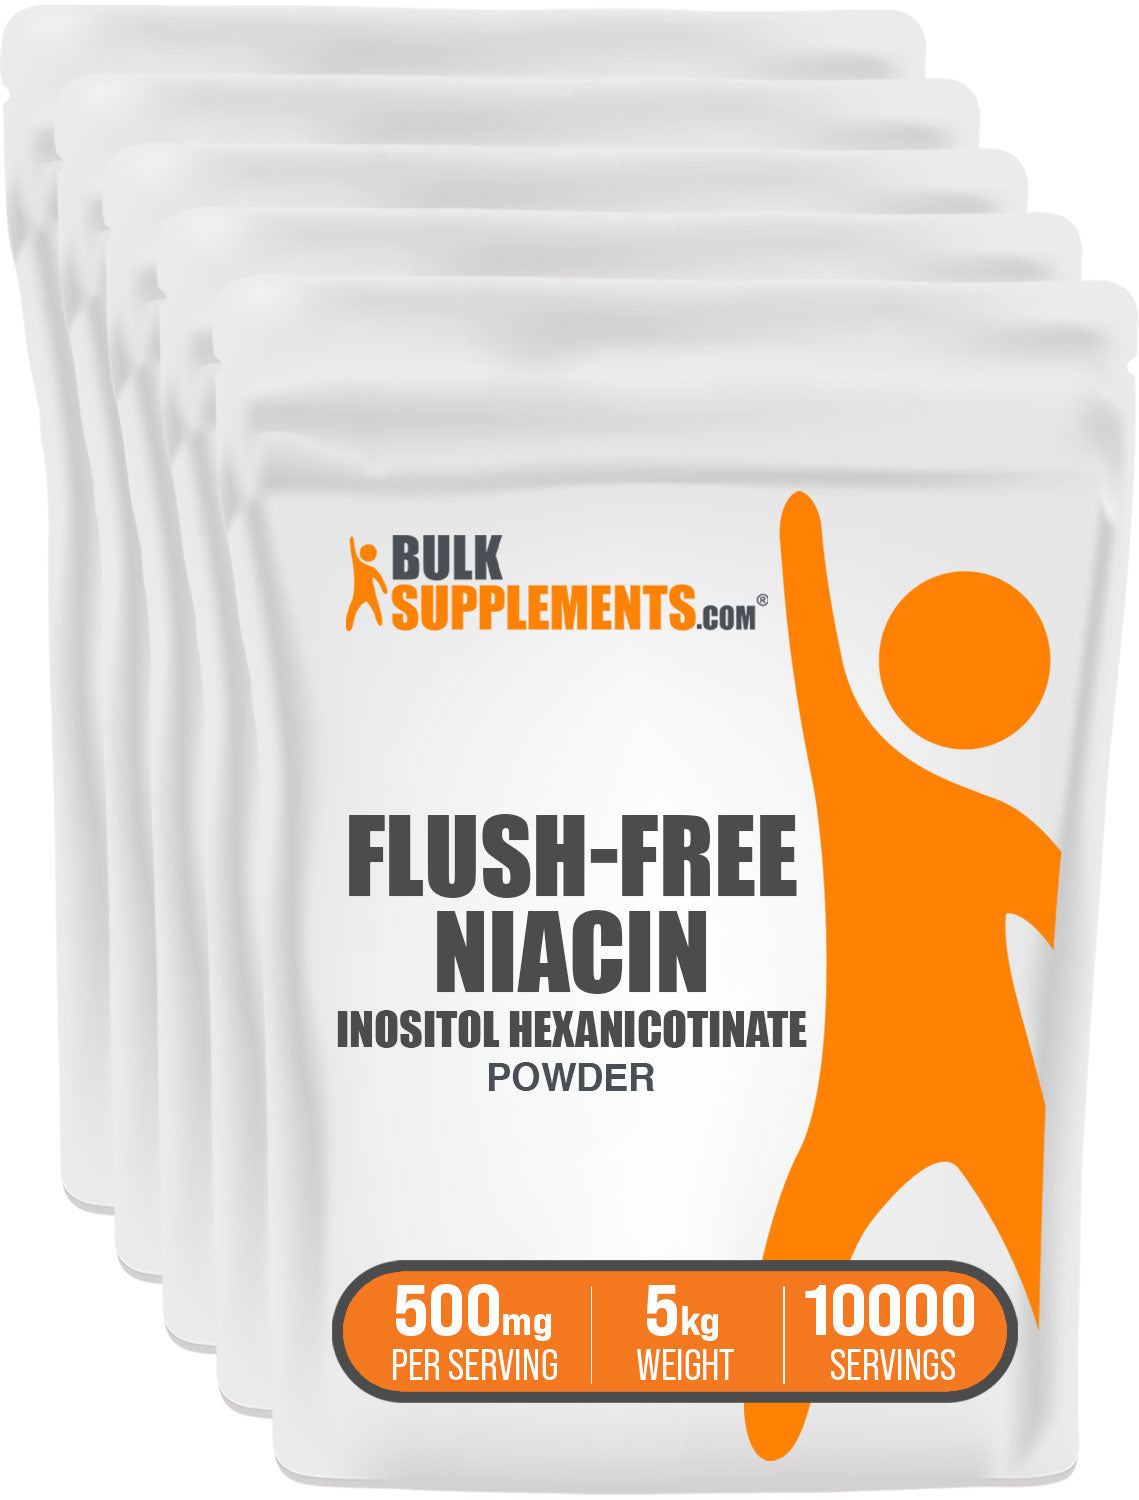 BulkSupplements.com Flush-Free Niacin Powder 5kg bags